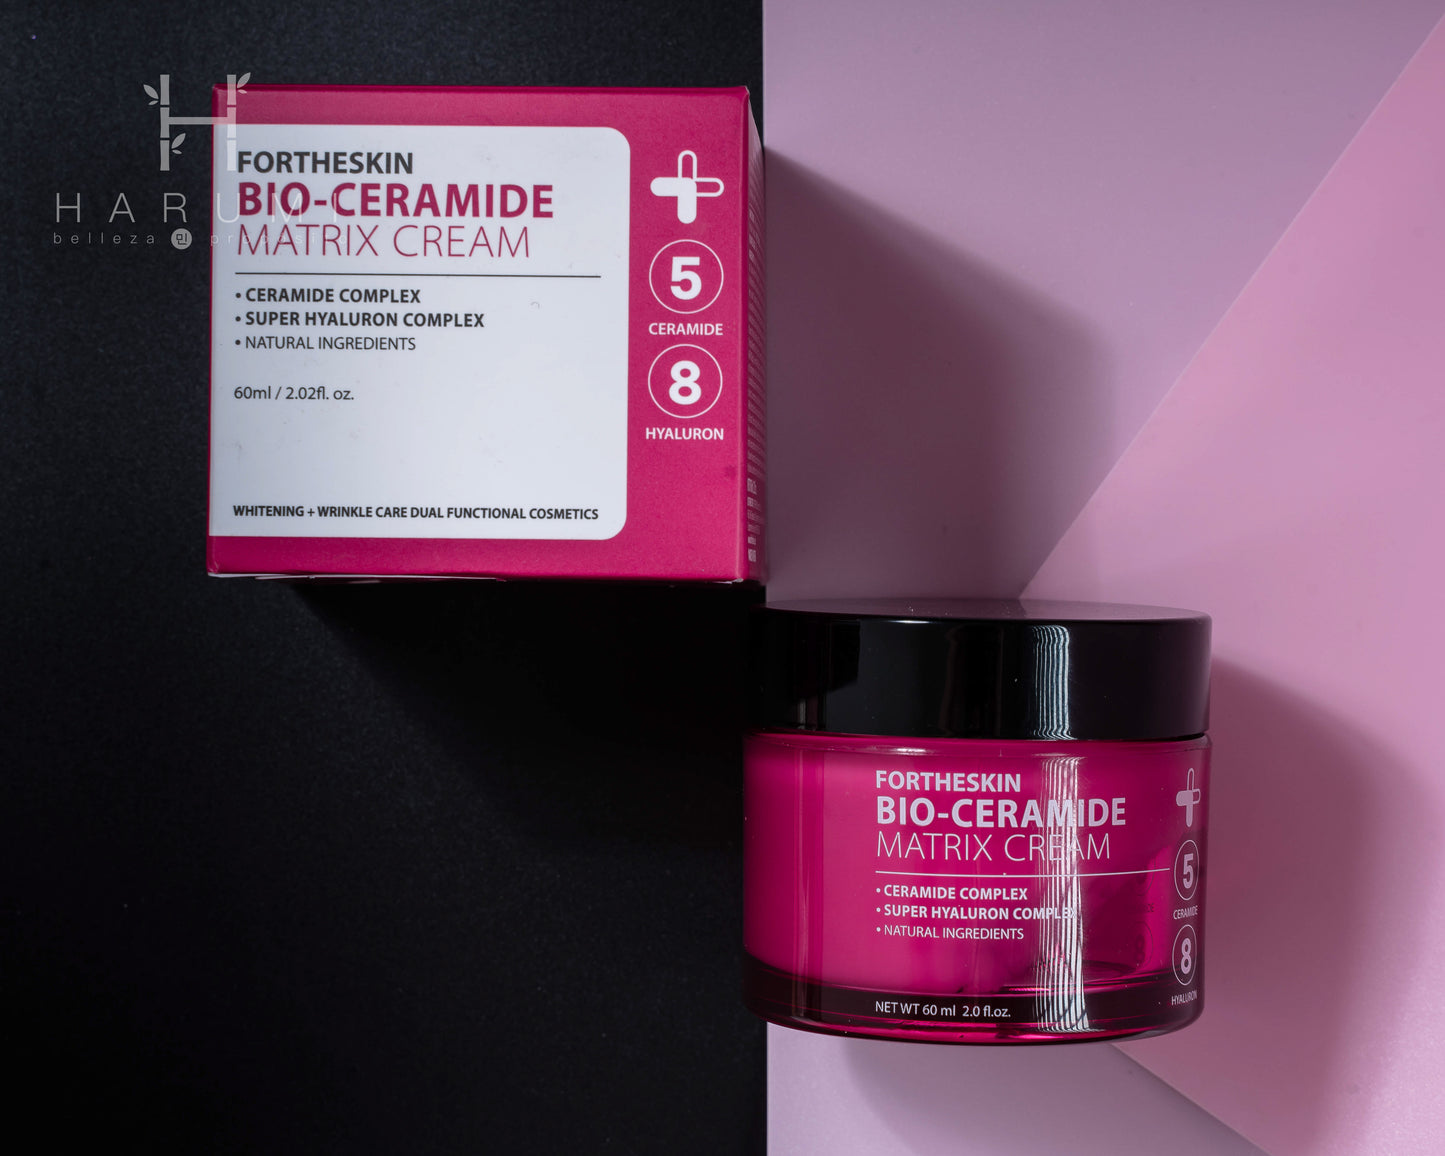 Fortheskin Bio-Ceramide Matrix Cream